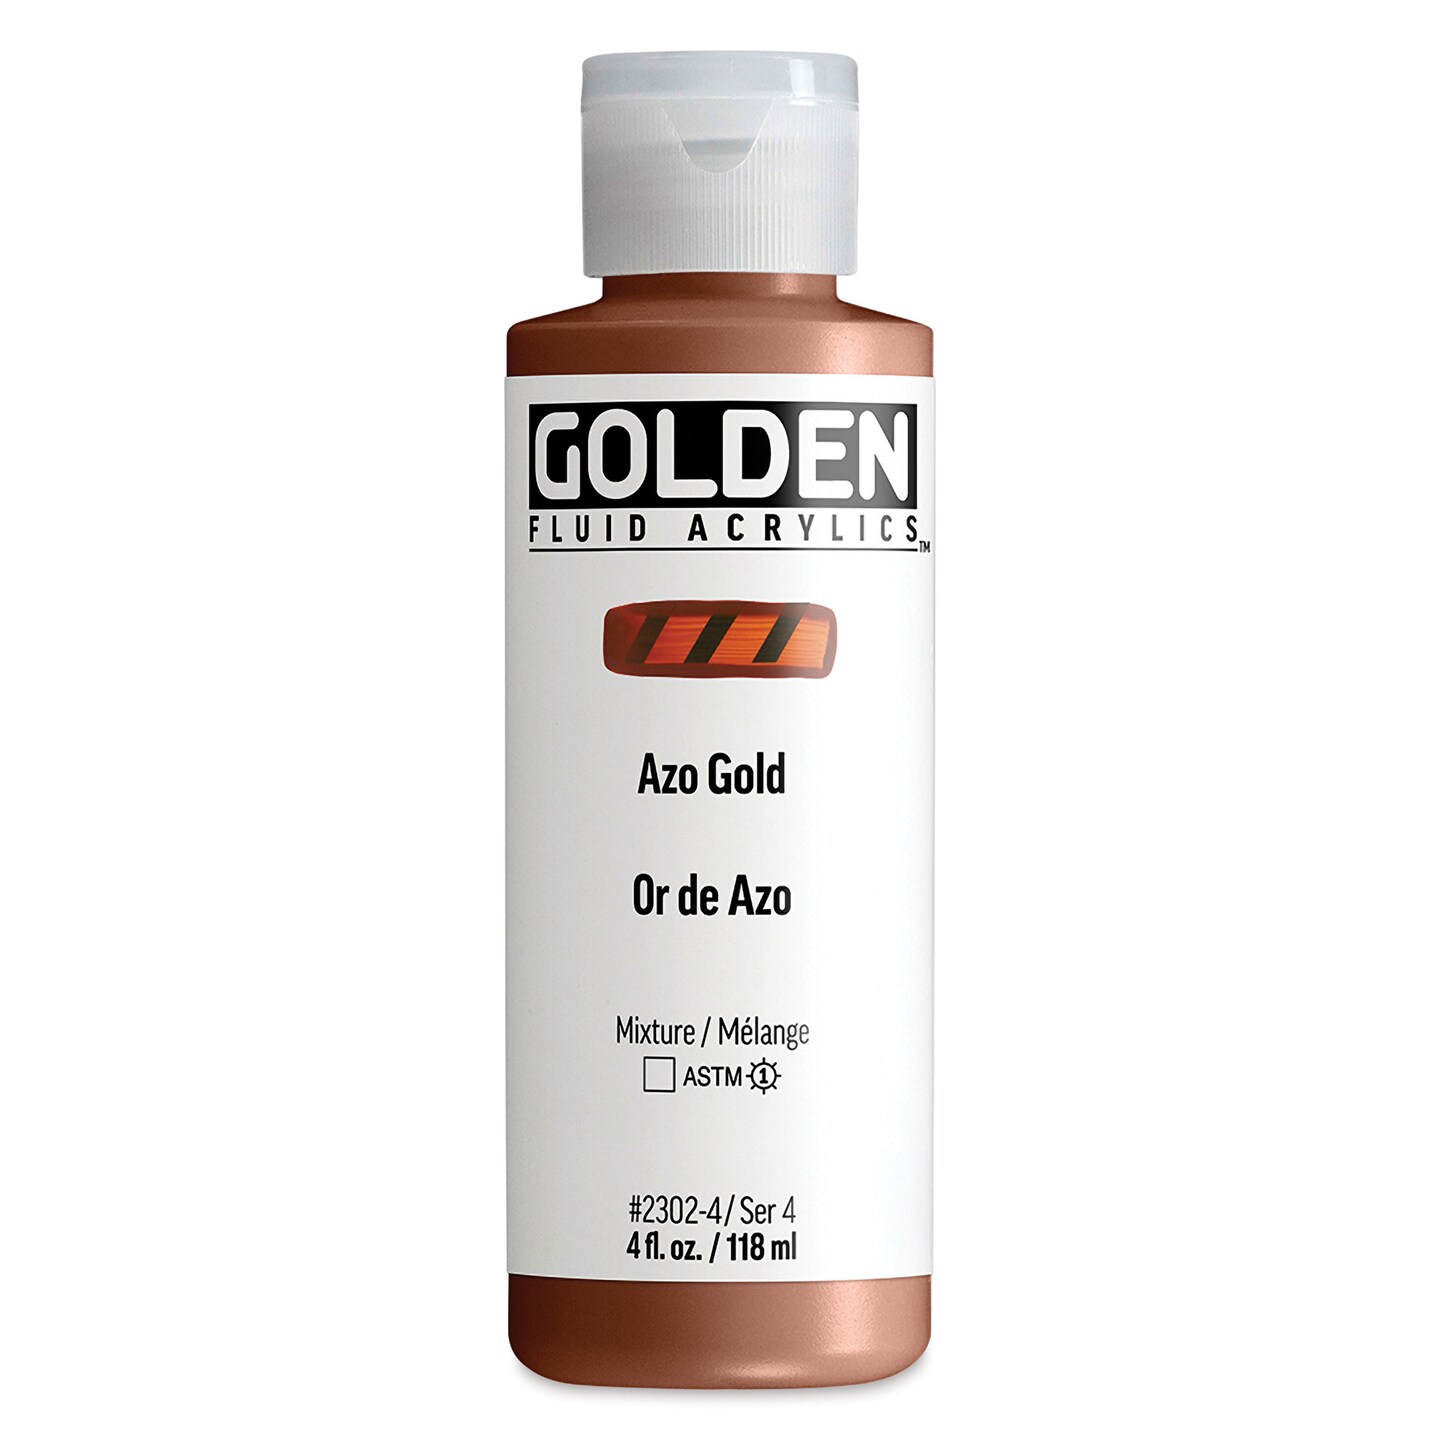 Golden Fluid Acrylic - Azo Gold, 4 oz bottle